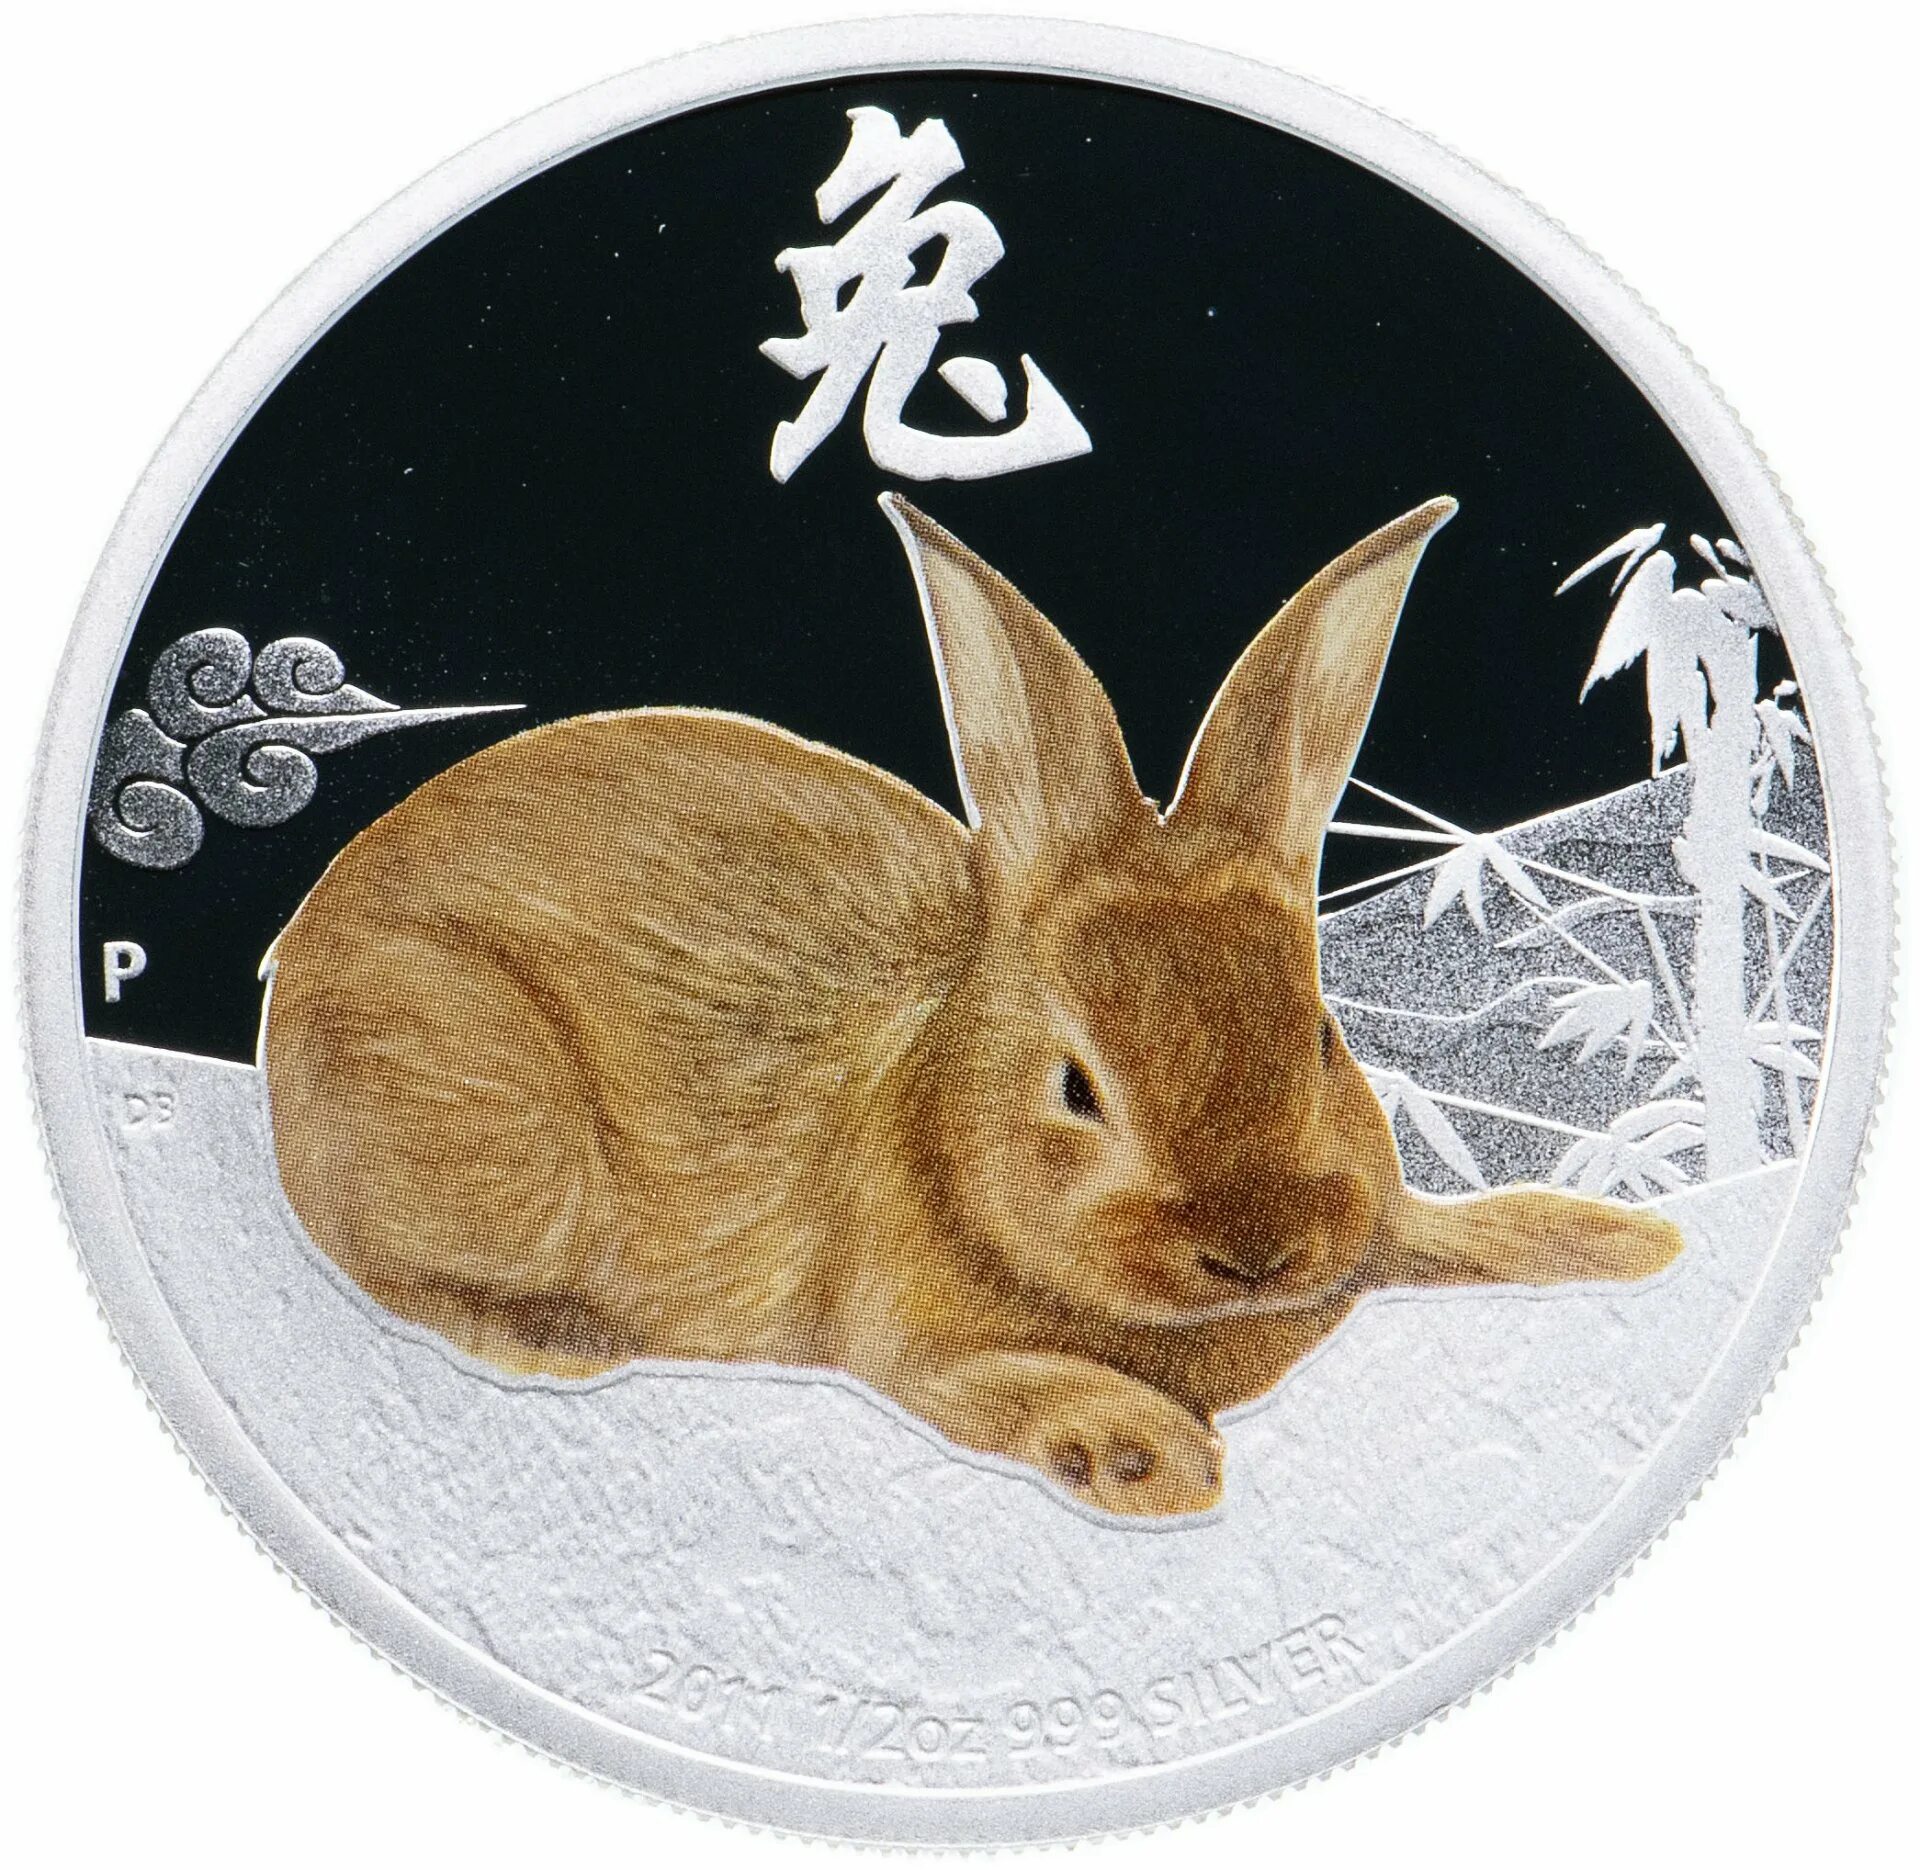 2023 год кого. Острова Кука 50 центов 2011 год кролика. Монета кролик серебро 2011 year of the Rabbit 2 доллара. Год кота и кролика 2023. Серебряная монета год кролика.